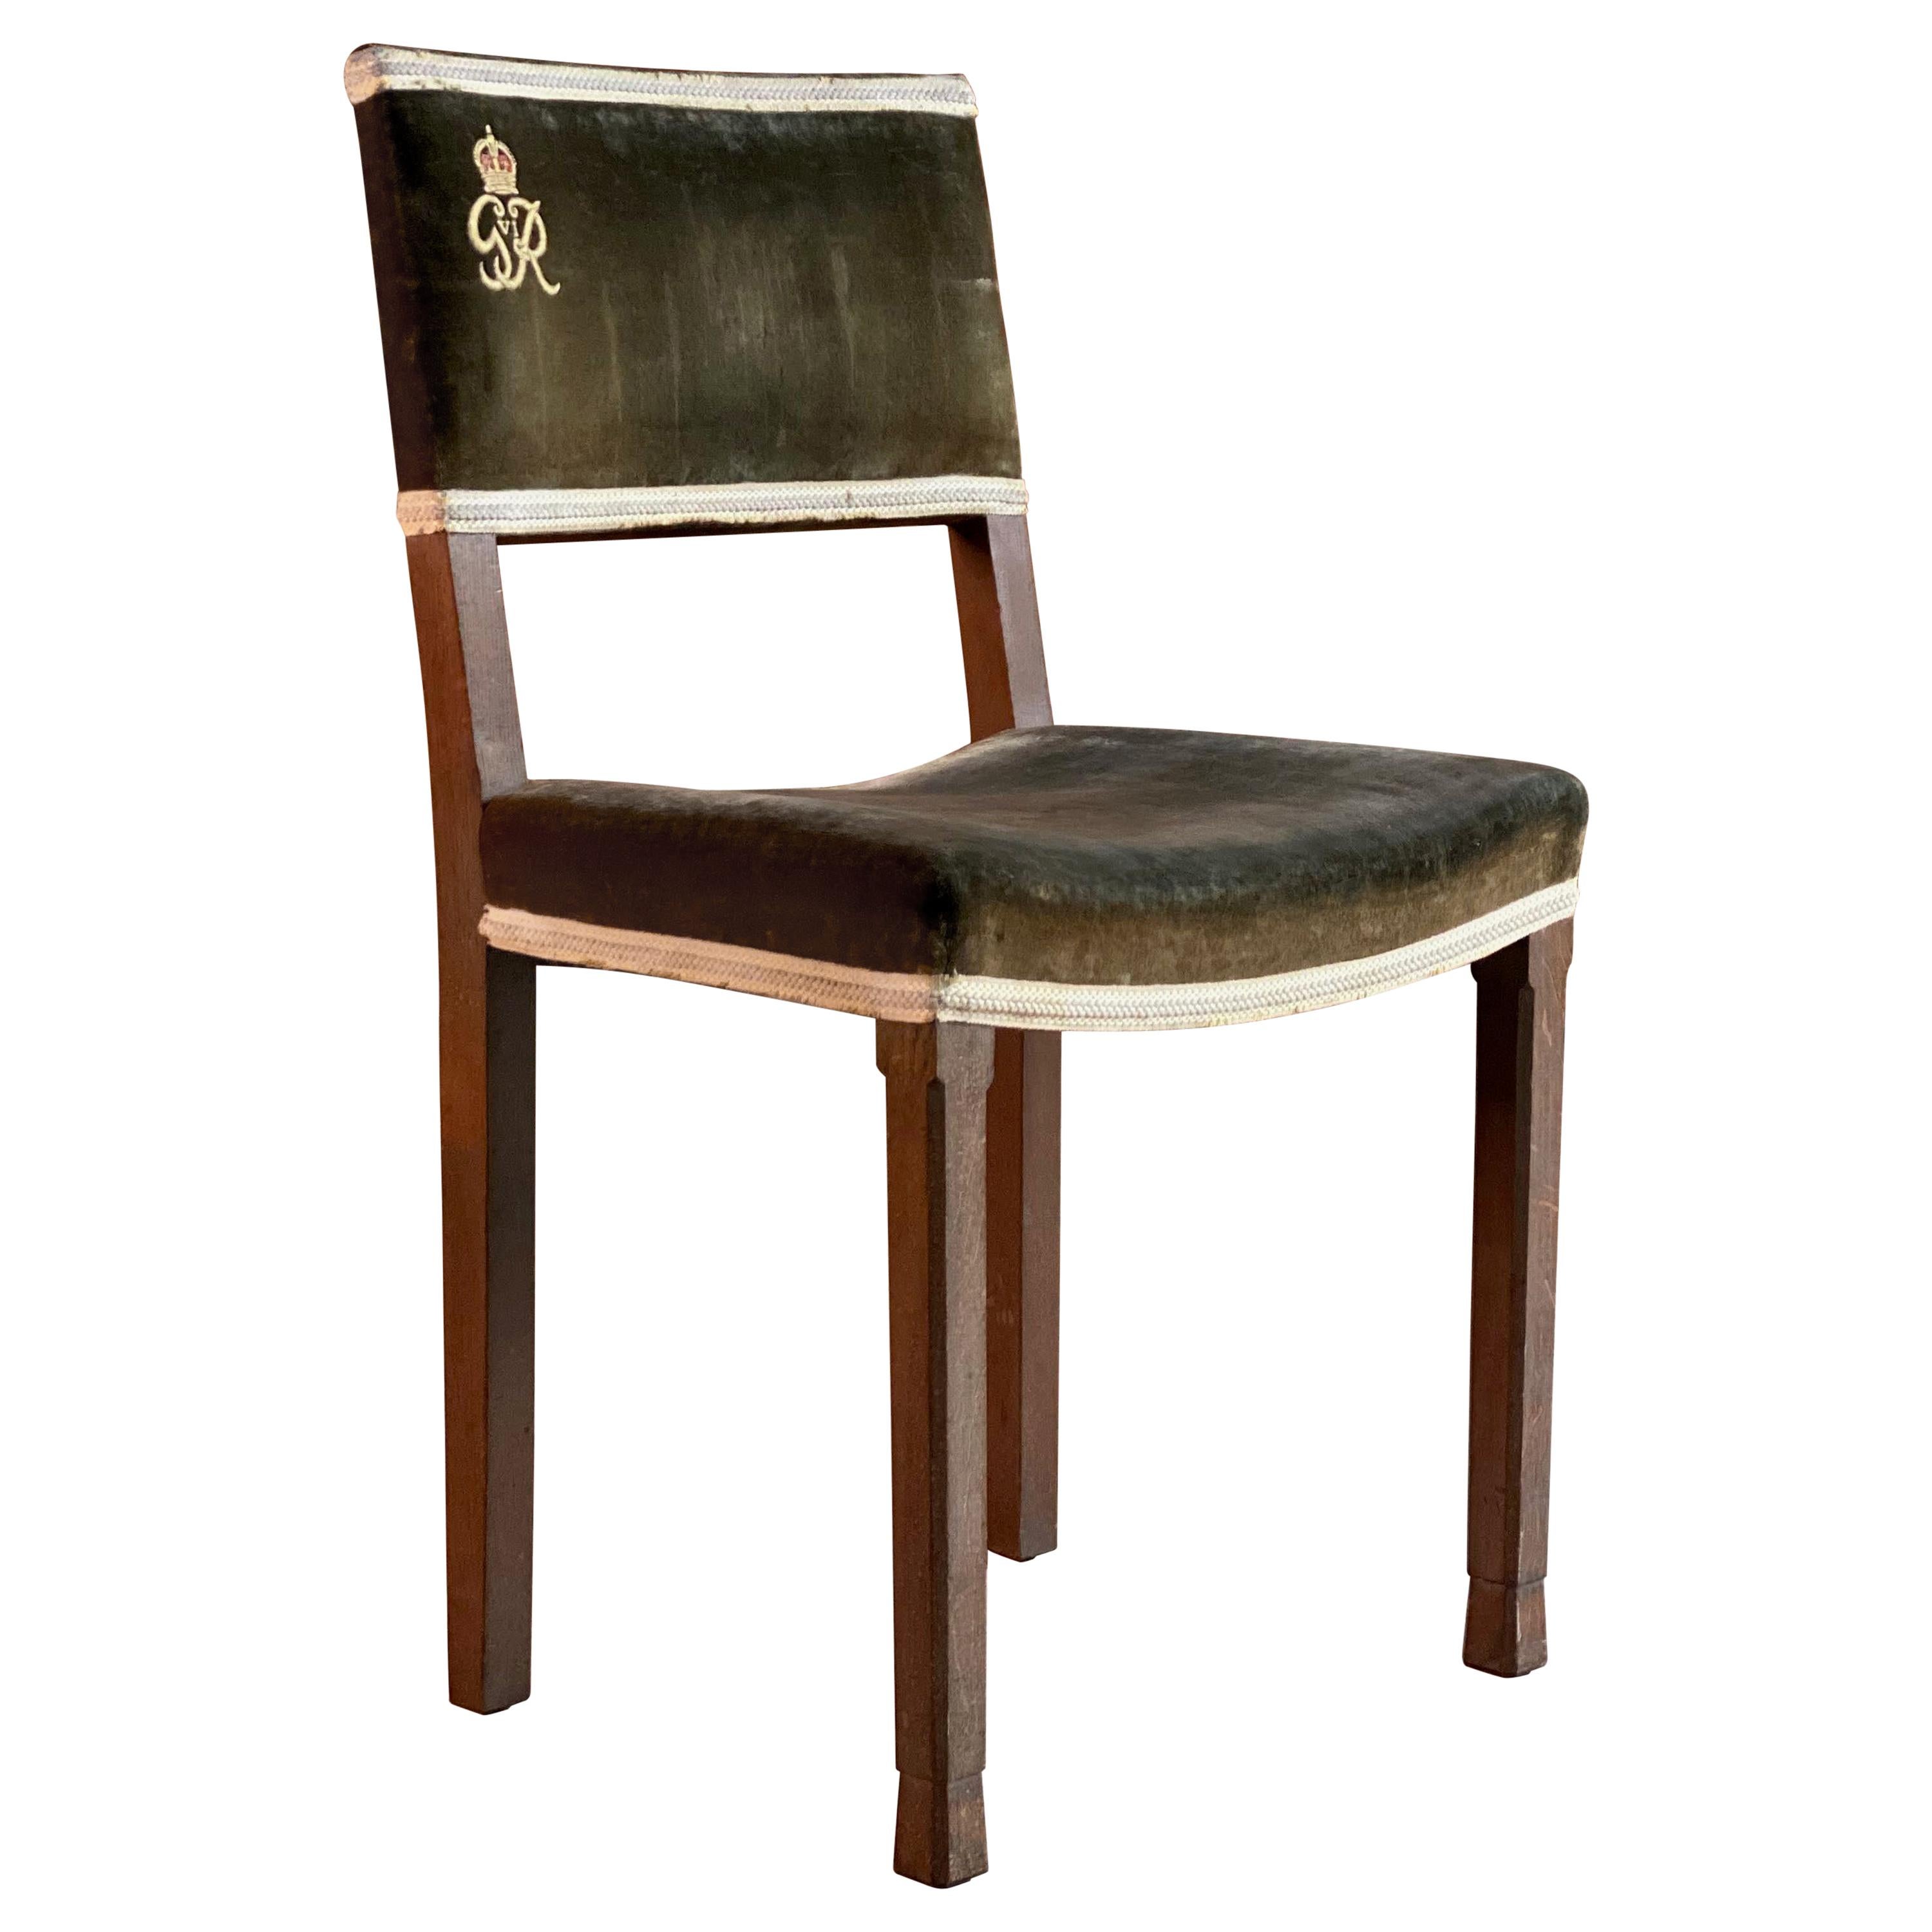 Rare George VI Coronation Chair 1937 GRVI W Hands & Sons Original